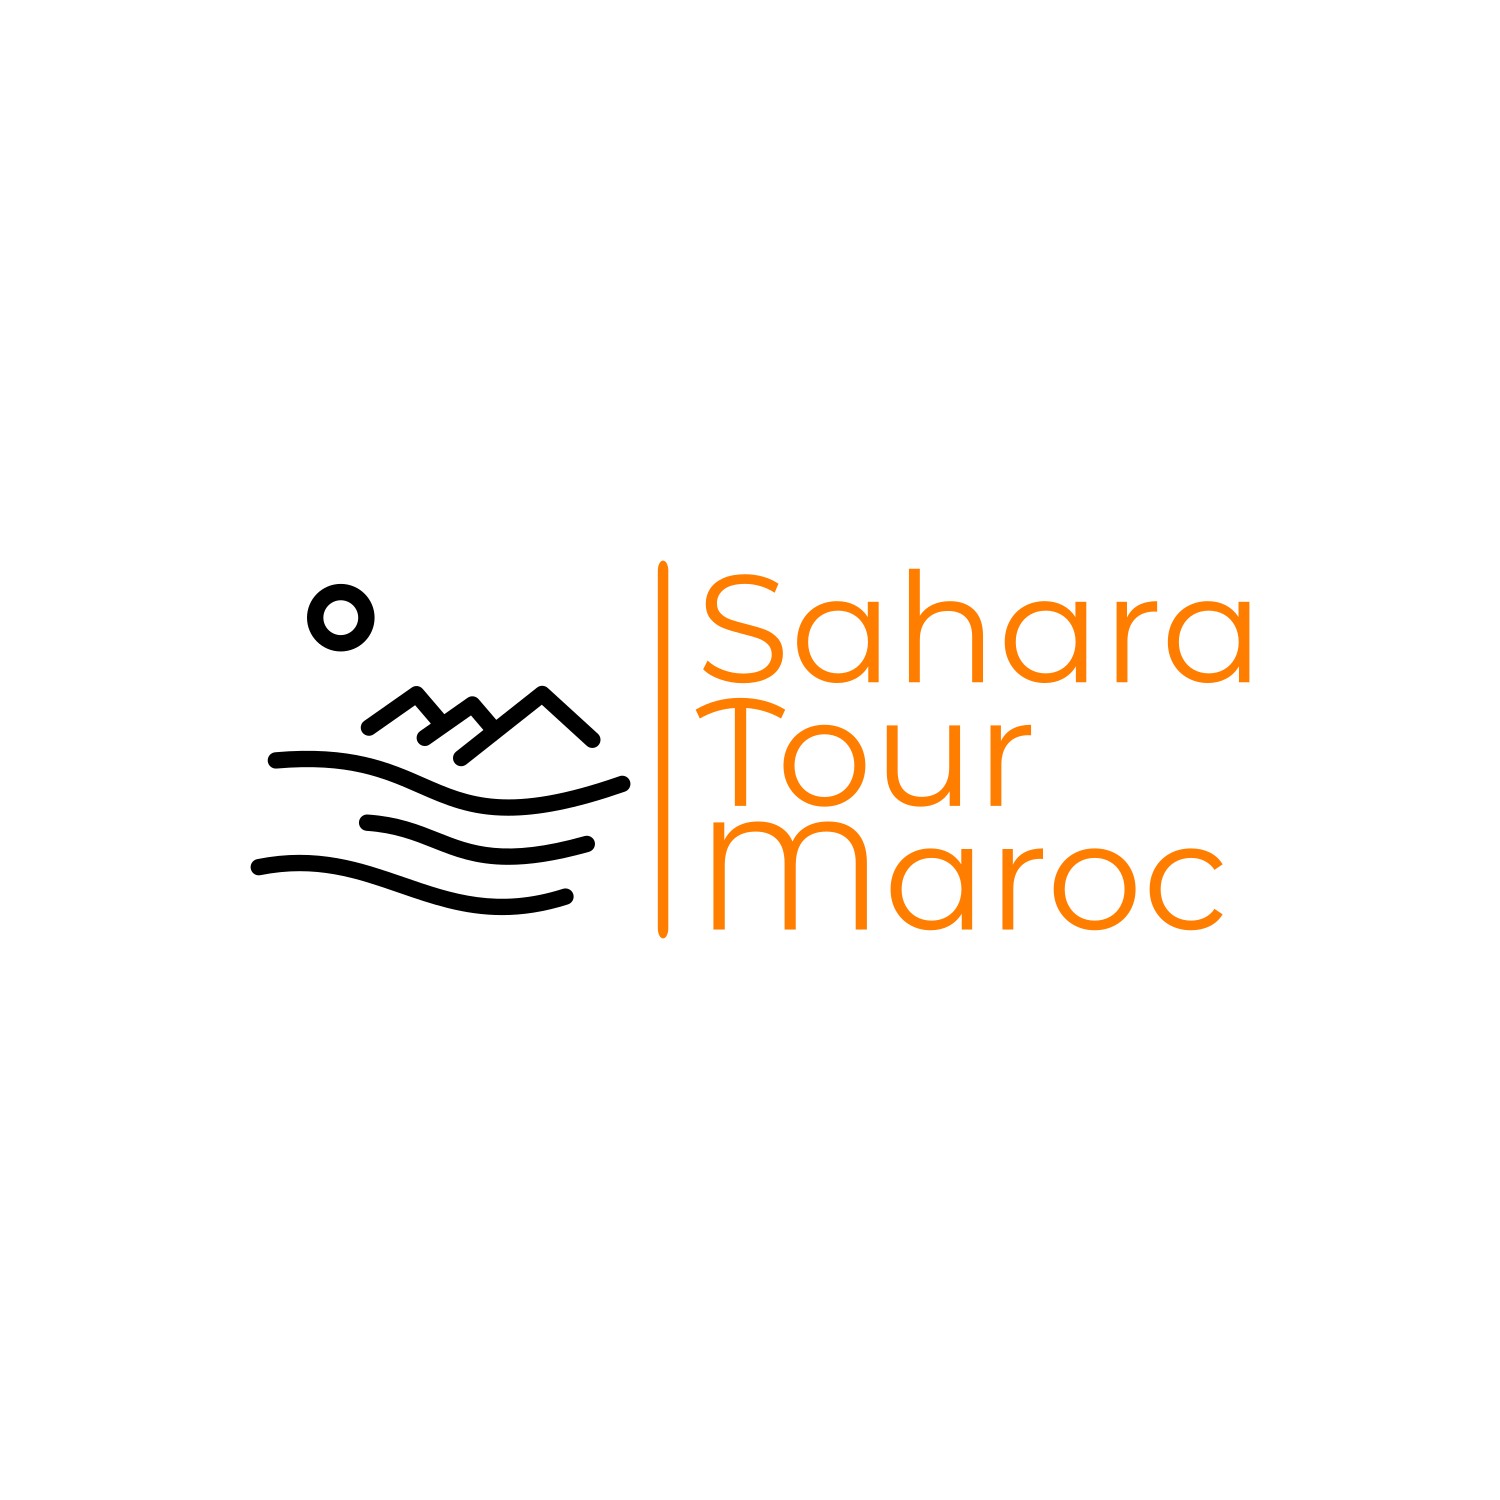 Sahara Tour Maroc